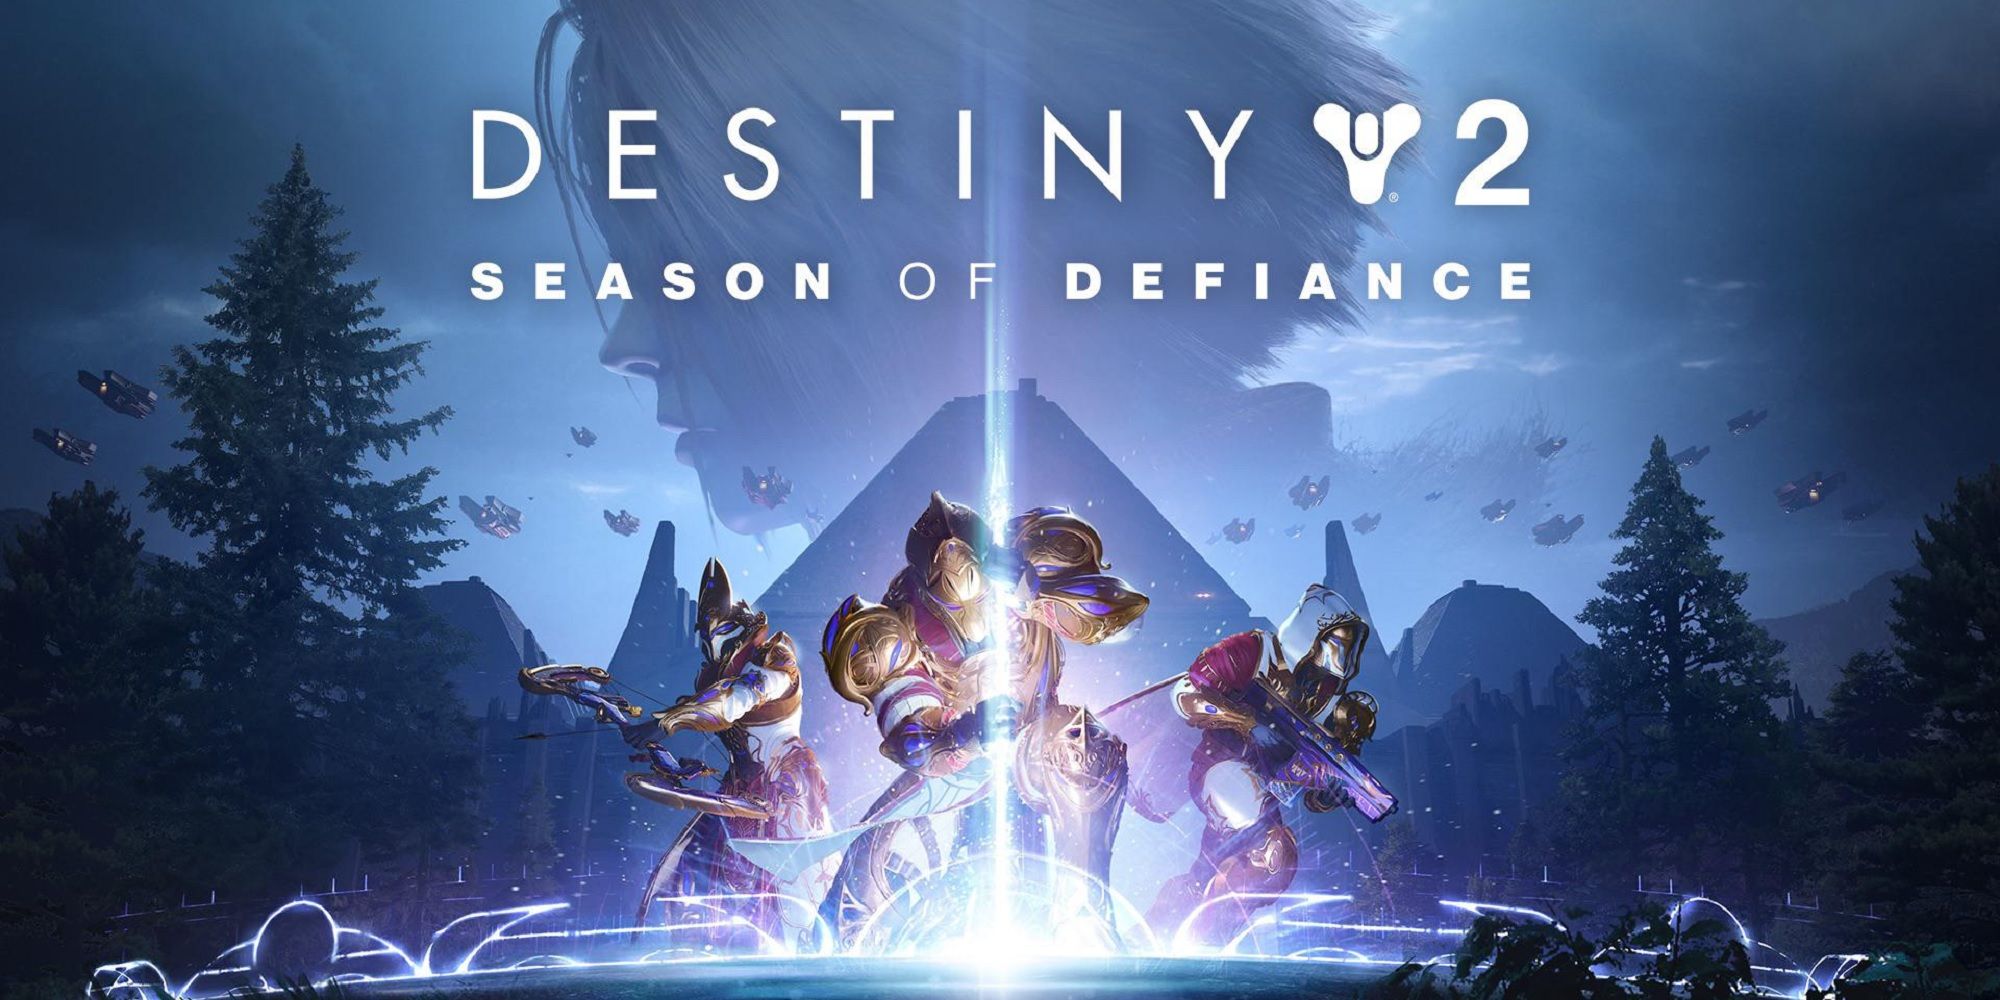 Destiny 2 season of defiance splash screen